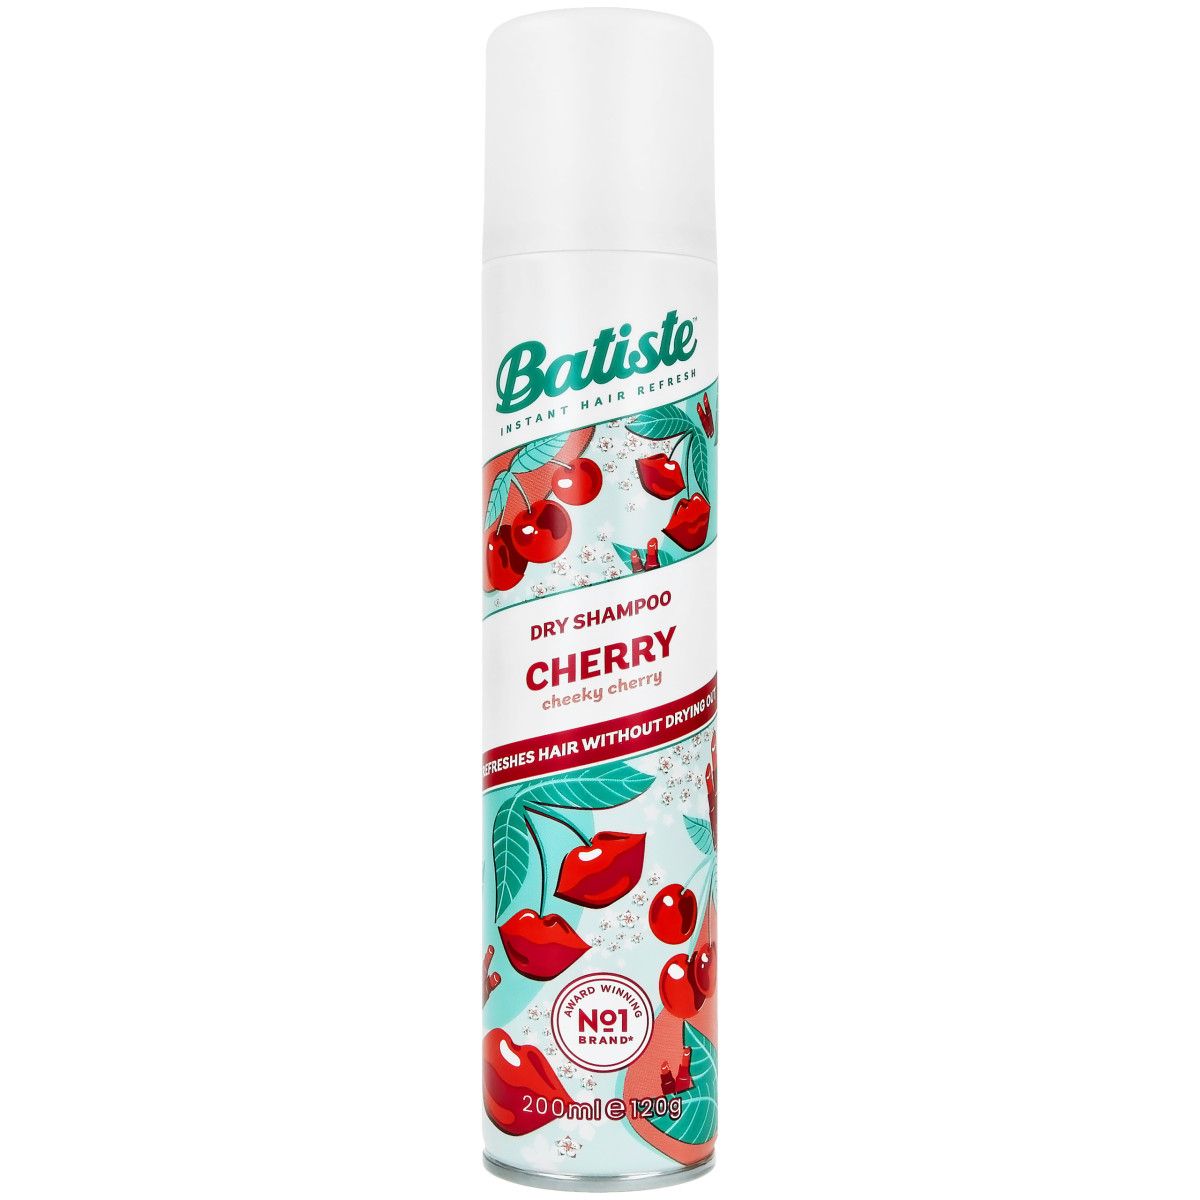 Batiste Cherry Dry, suchy szampon o wiśniowym zapachu, pochłania sebum 200ml